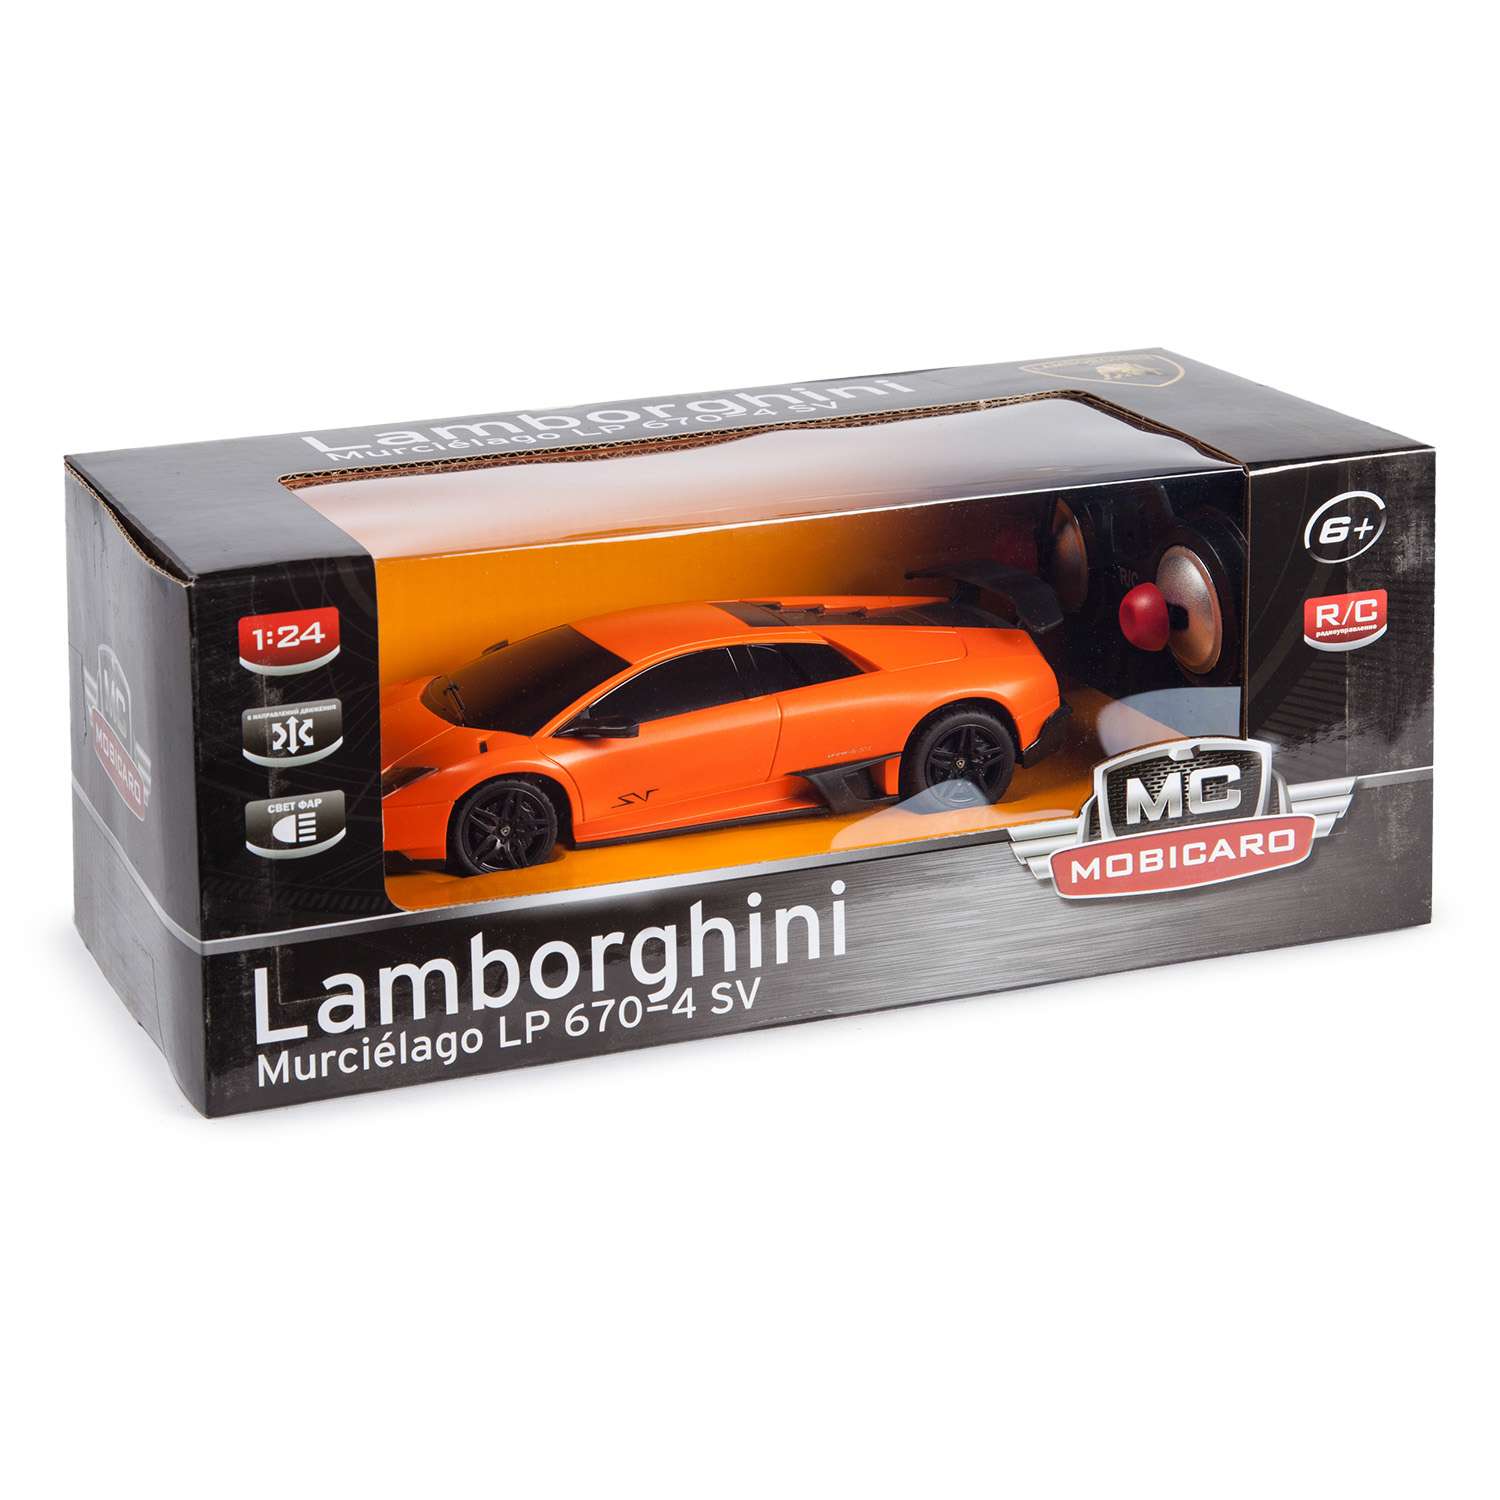 Mашина р/у Mobicaro Lamborghini LP670 1:24 - фото 3